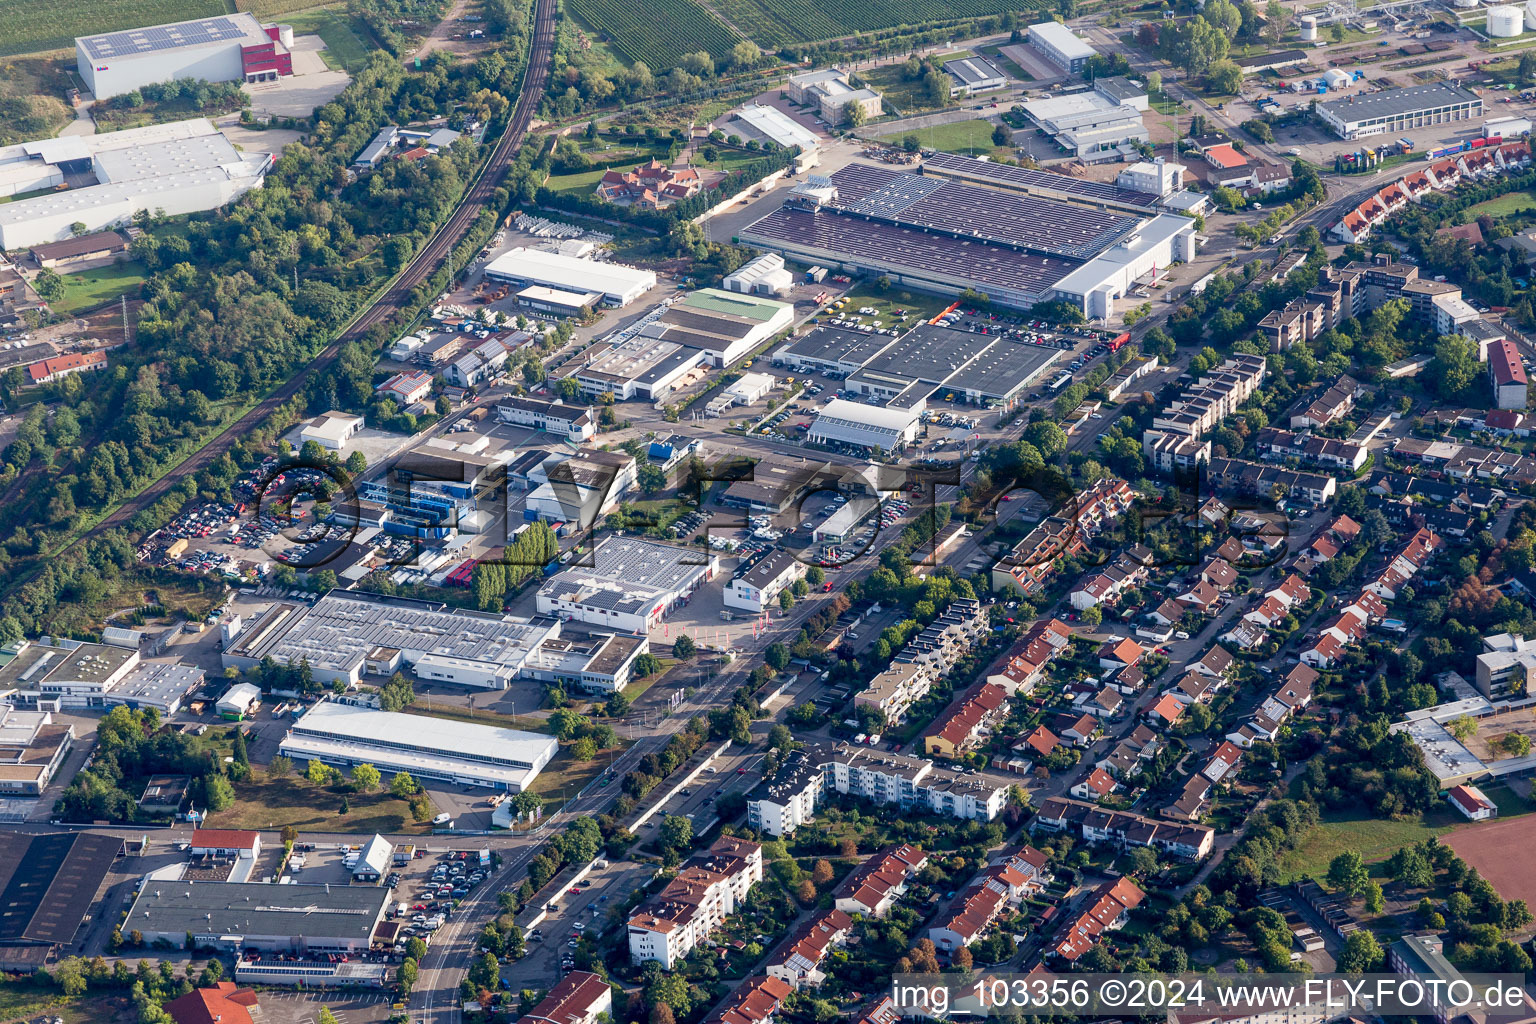 Aerial view of Landau North in Landau in der Pfalz in the state Rhineland-Palatinate, Germany